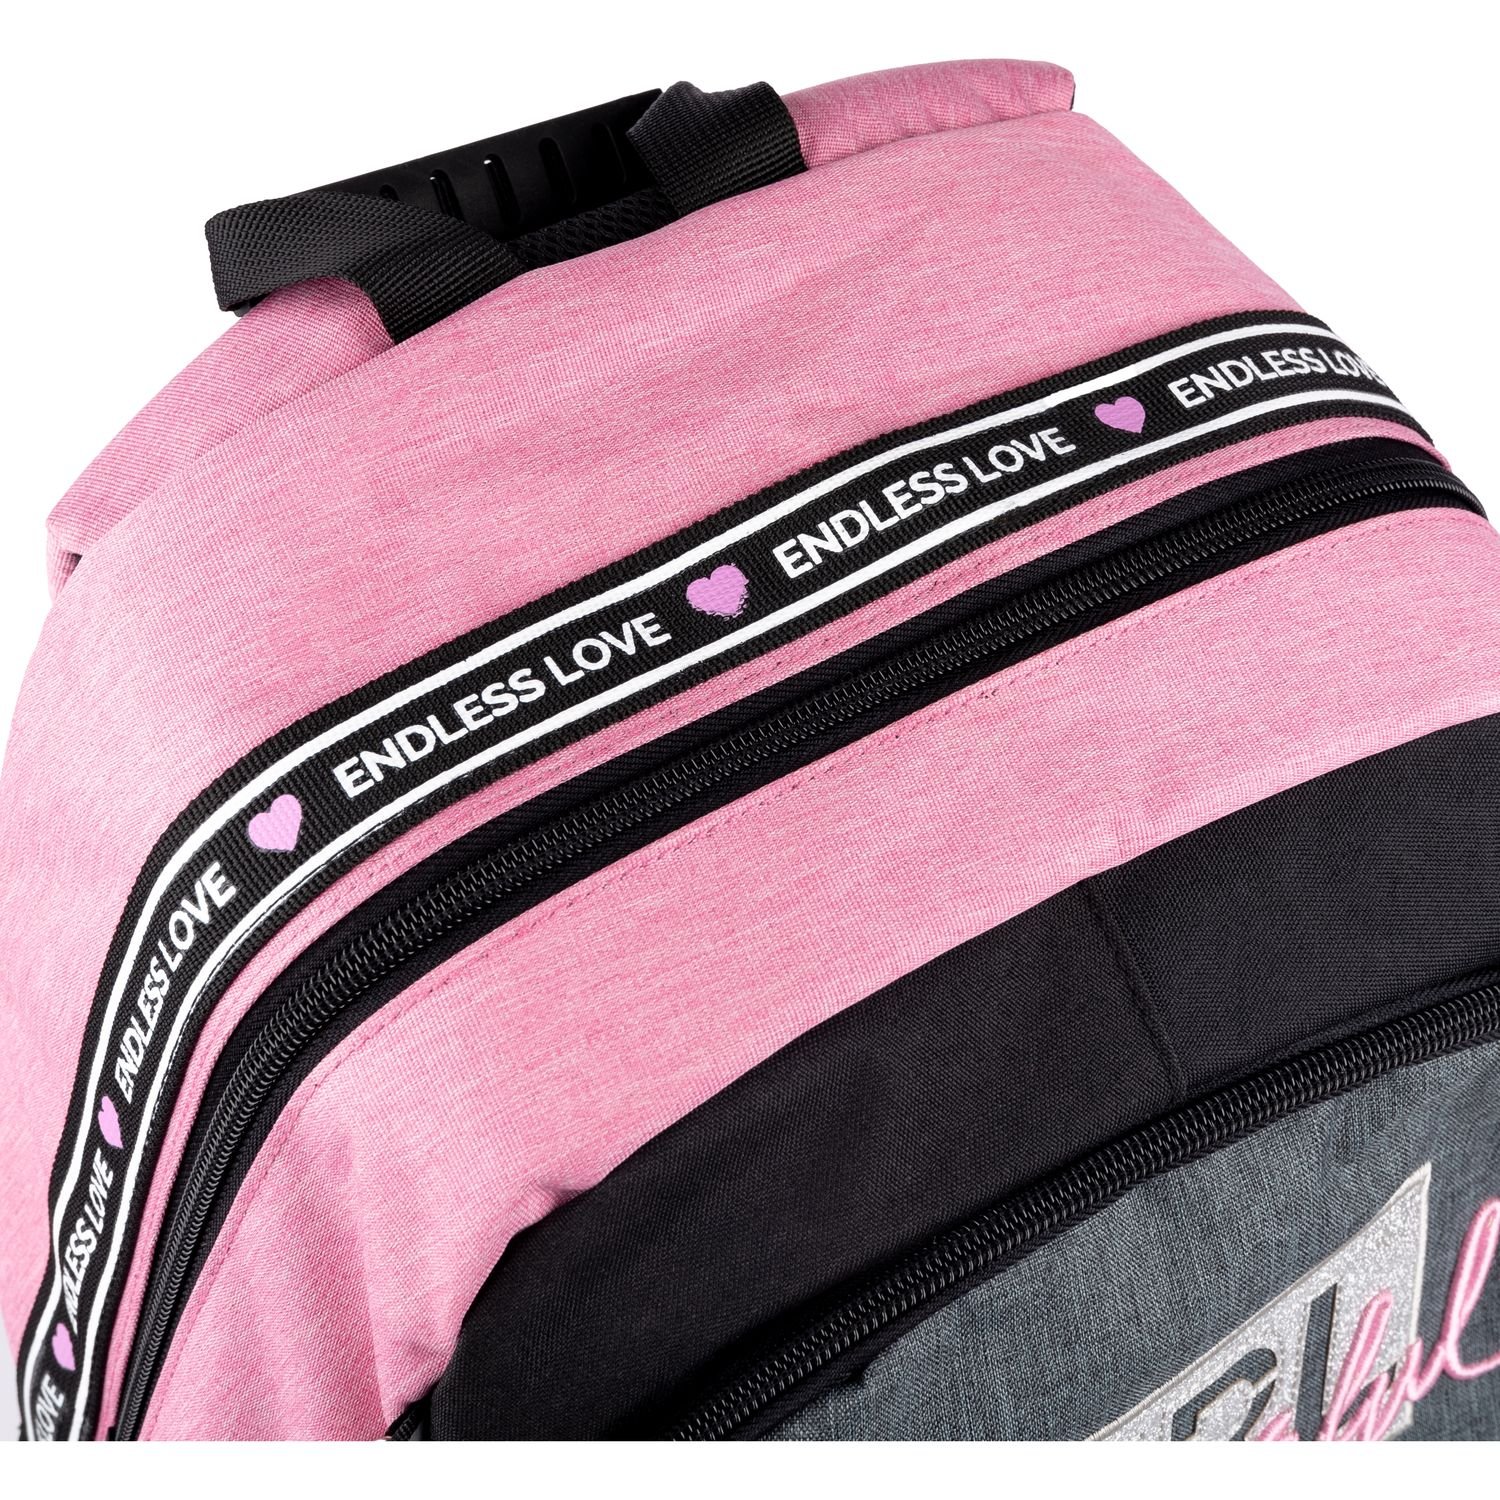 Рюкзак Yes TS-61 Girl Wonderful, черный с розовым (558908) - фото 8